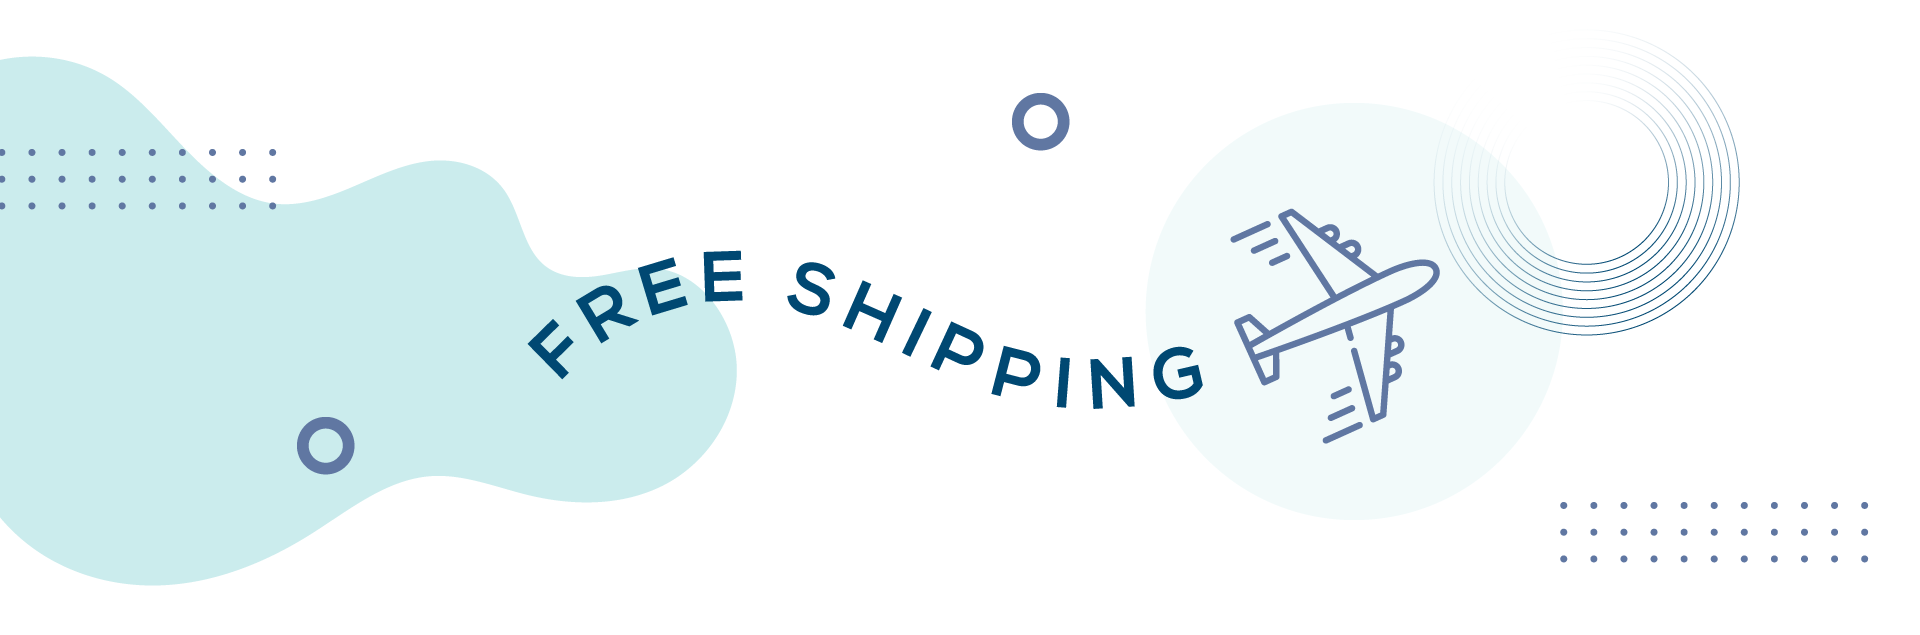 Free shipping logo on a white background